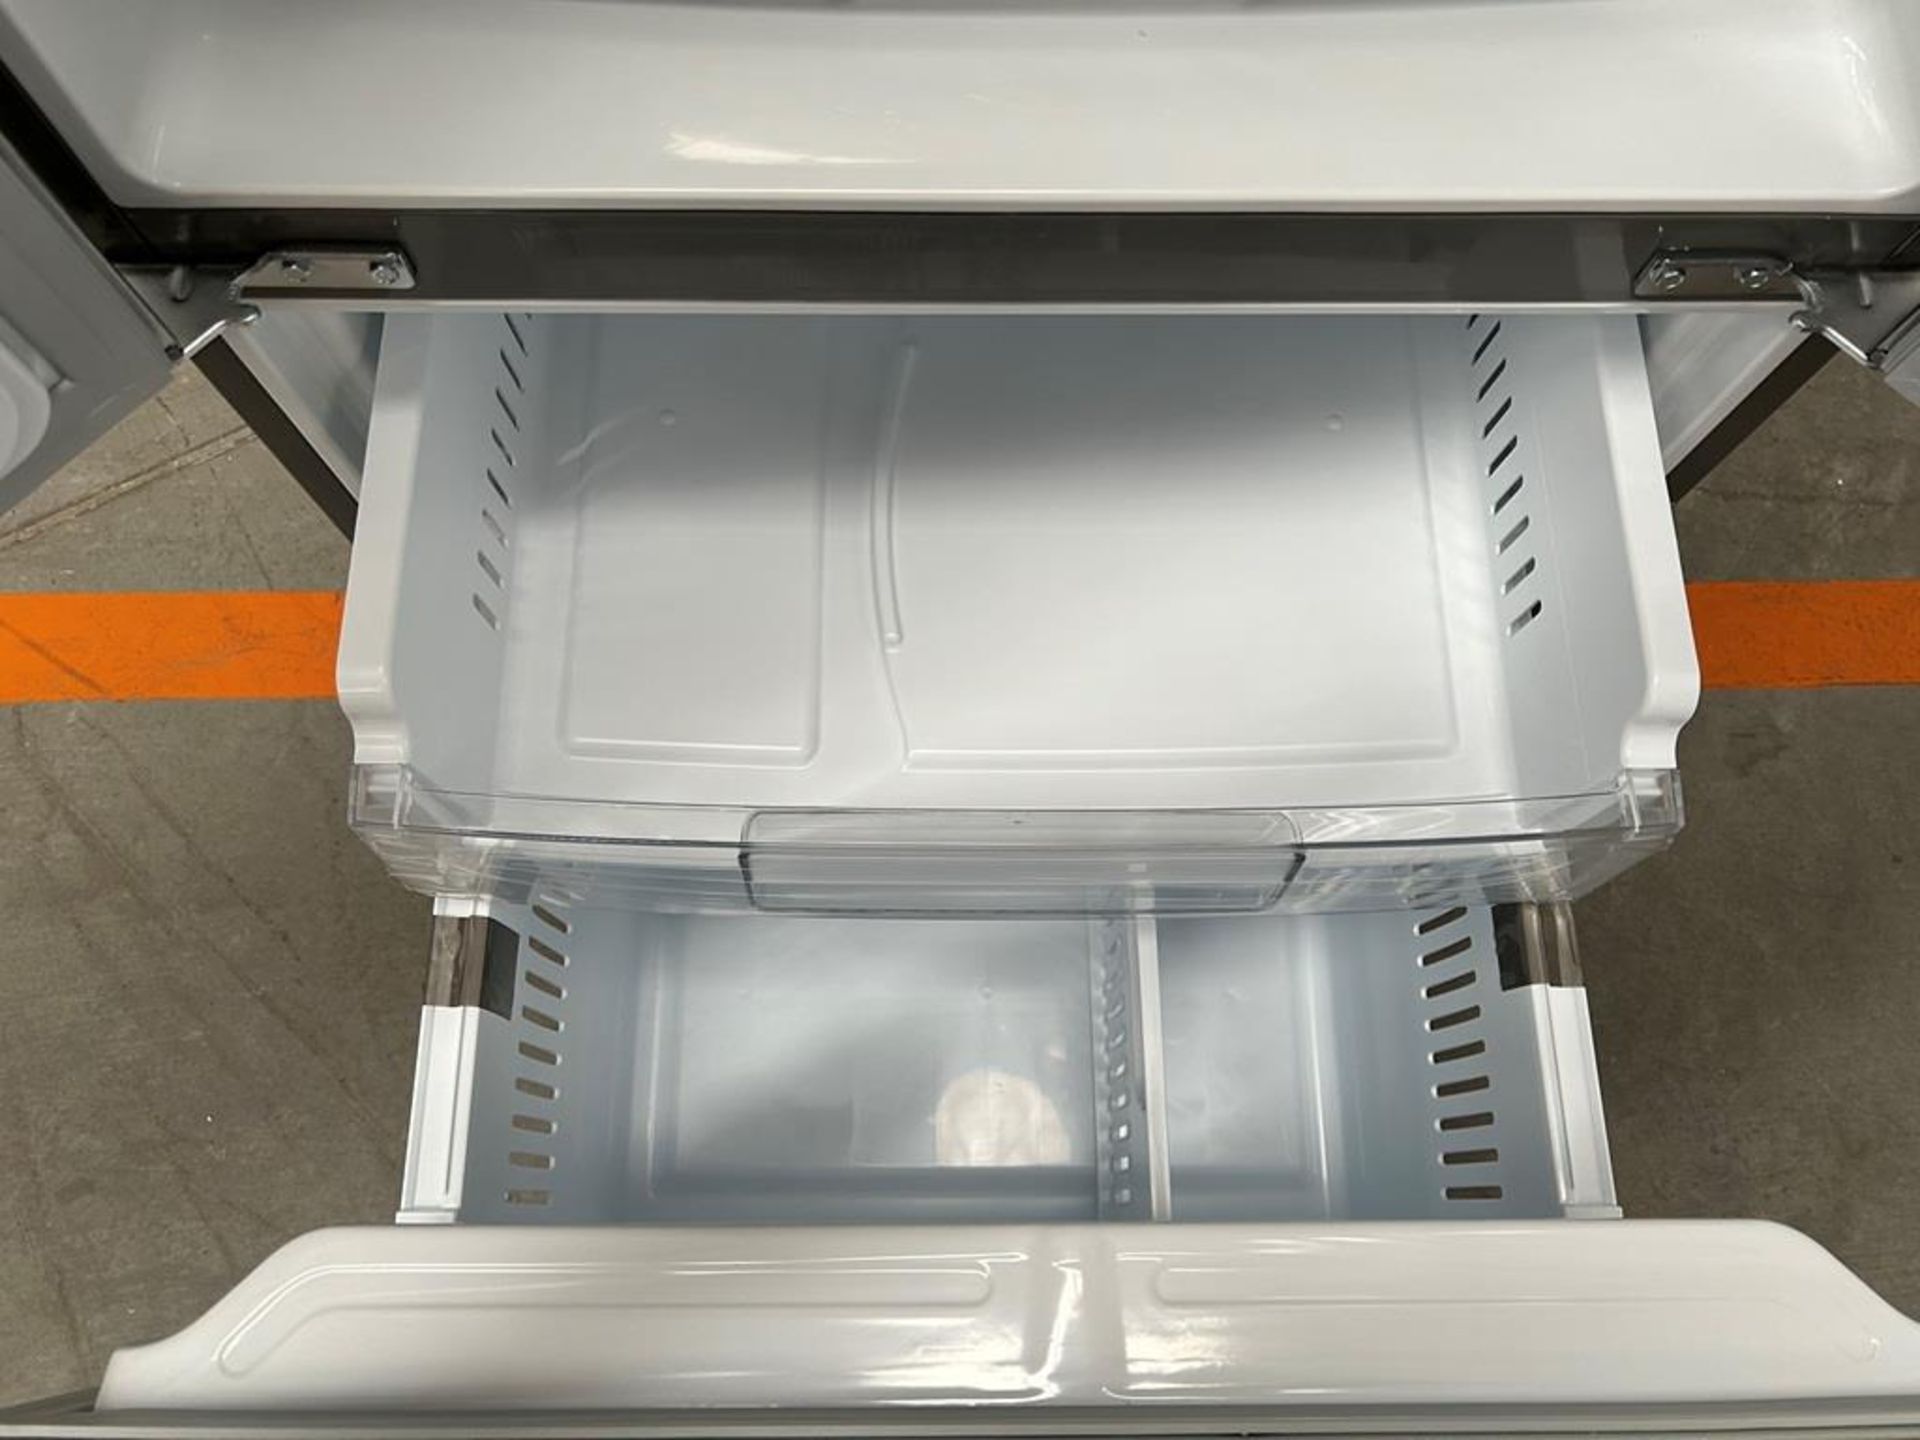 (NUEVO) Refrigerador Marca LG, Modelo GM22BIP, Serie 2C678, Color GRIS - Image 8 of 11